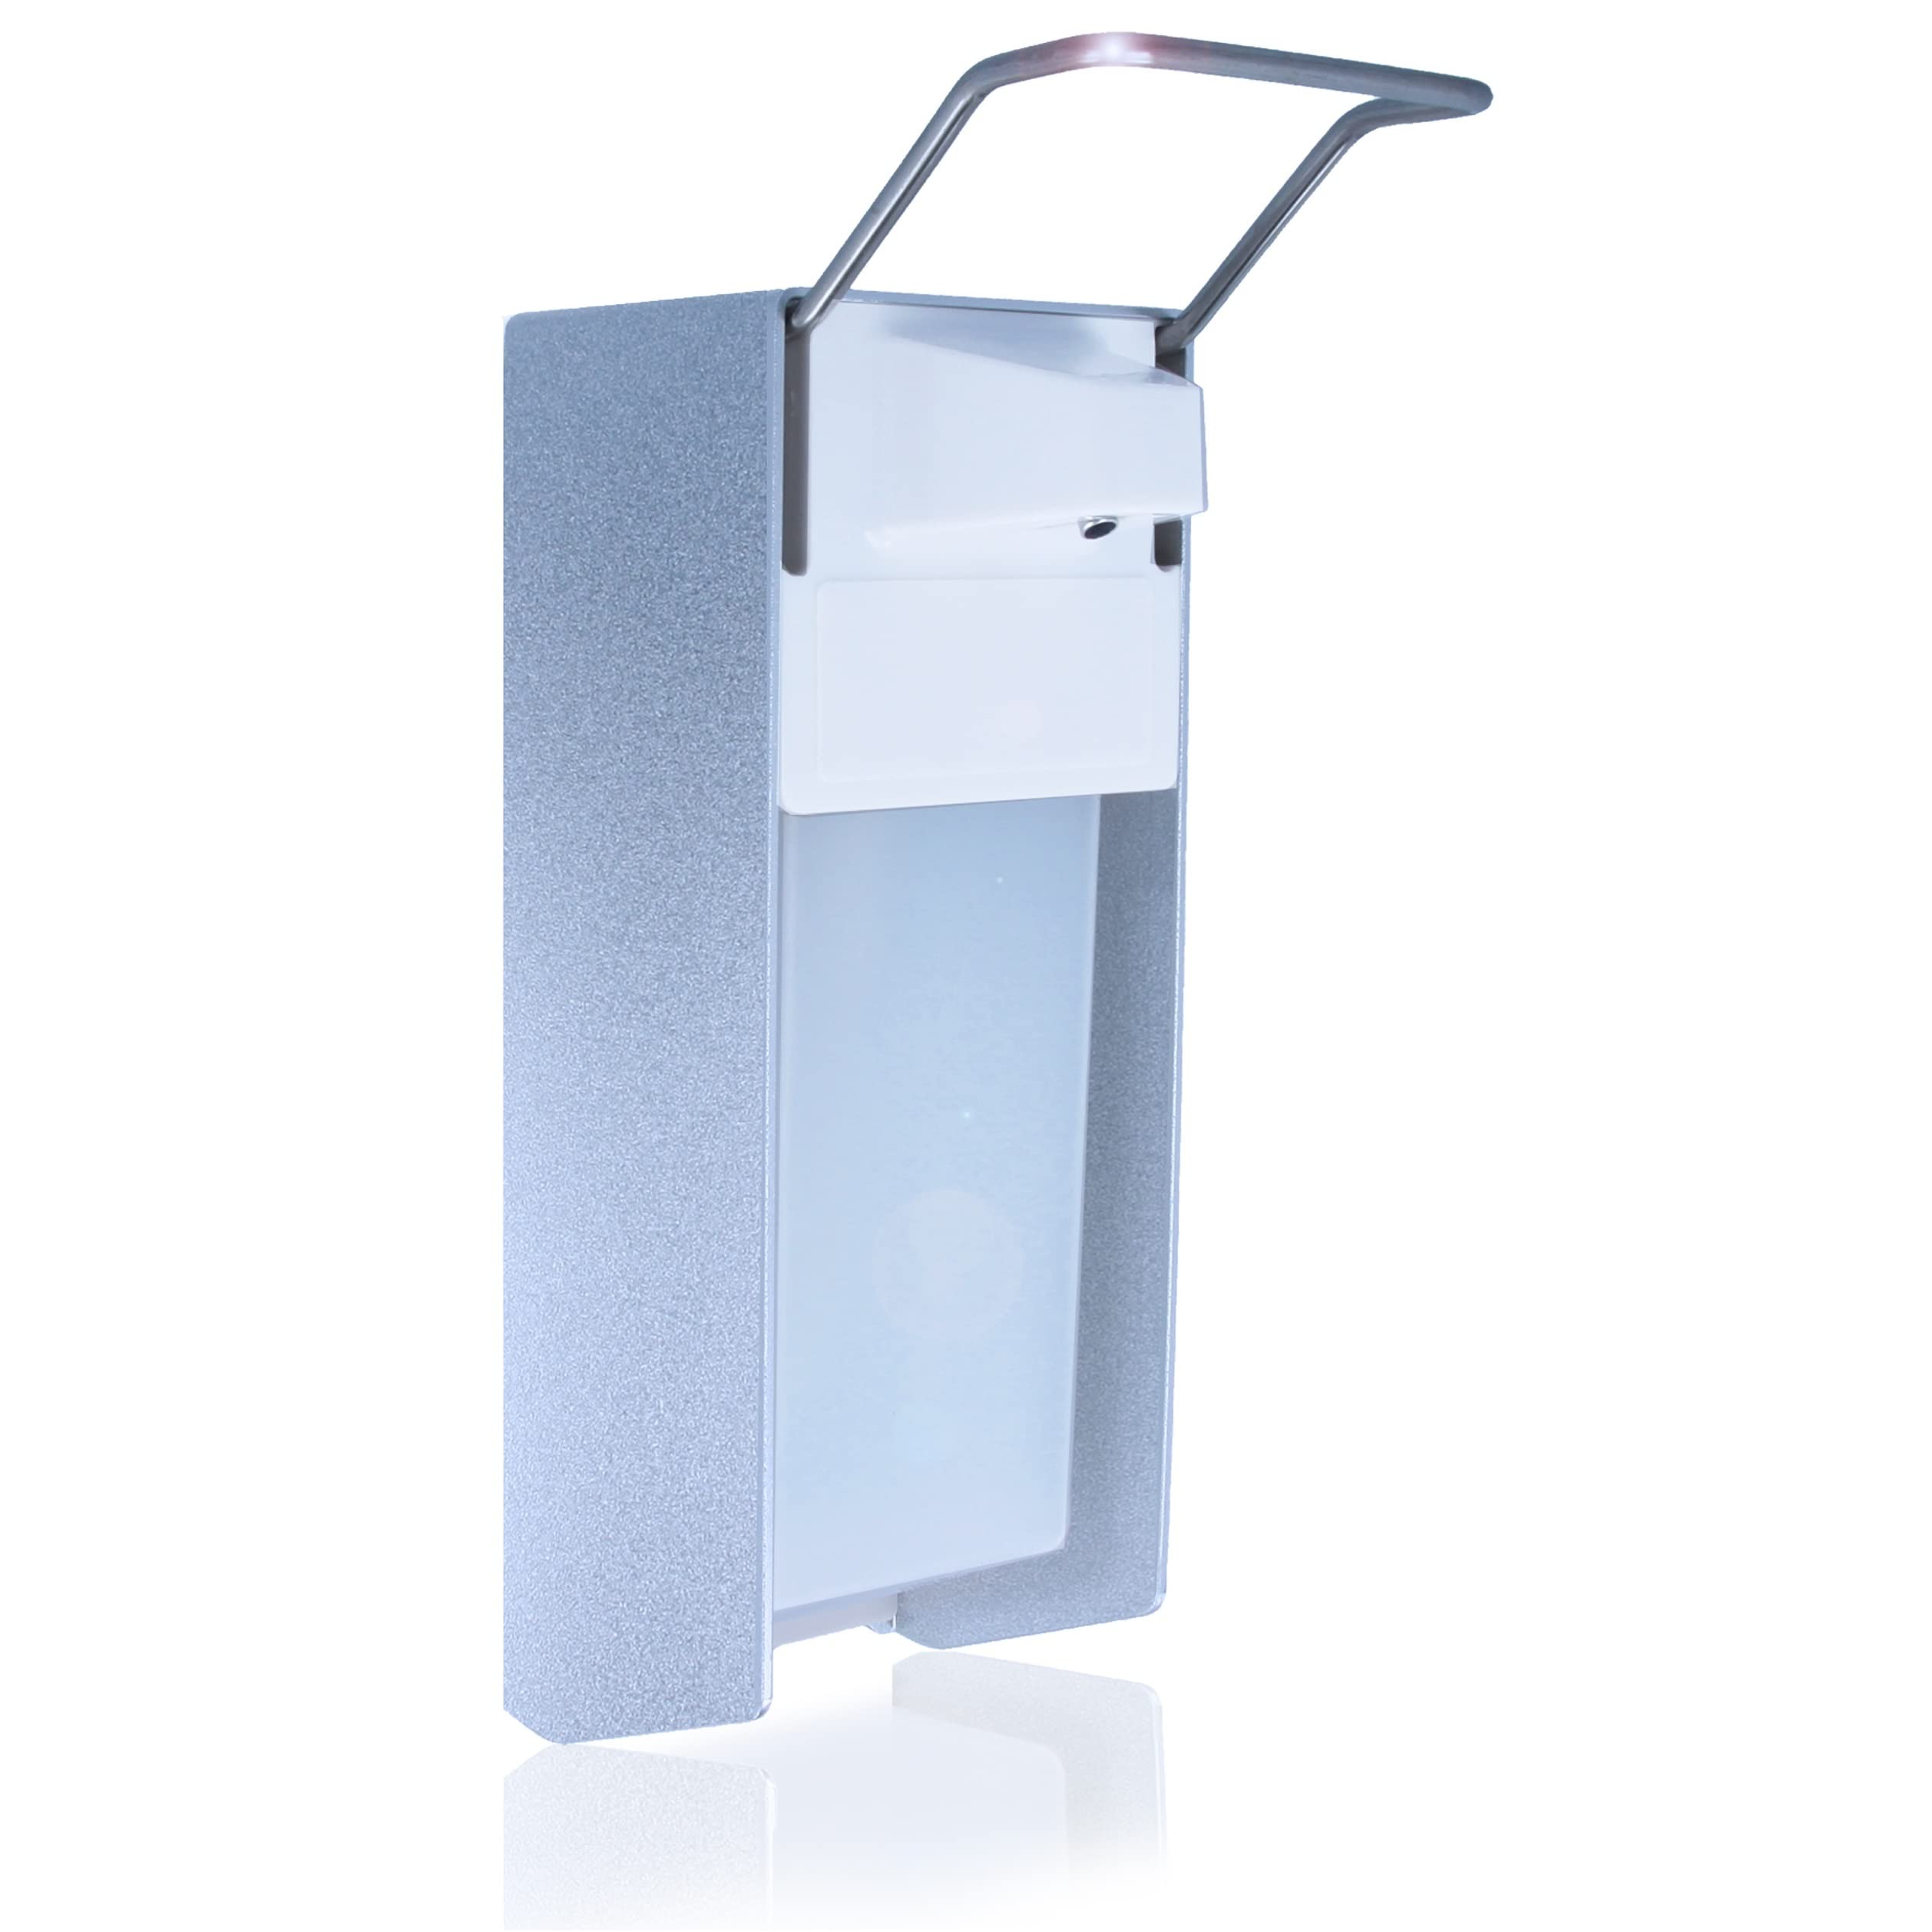 Horn Medical Desinfektionsspender - Wandspender aus Aluminium für 500 ml Euroflaschen